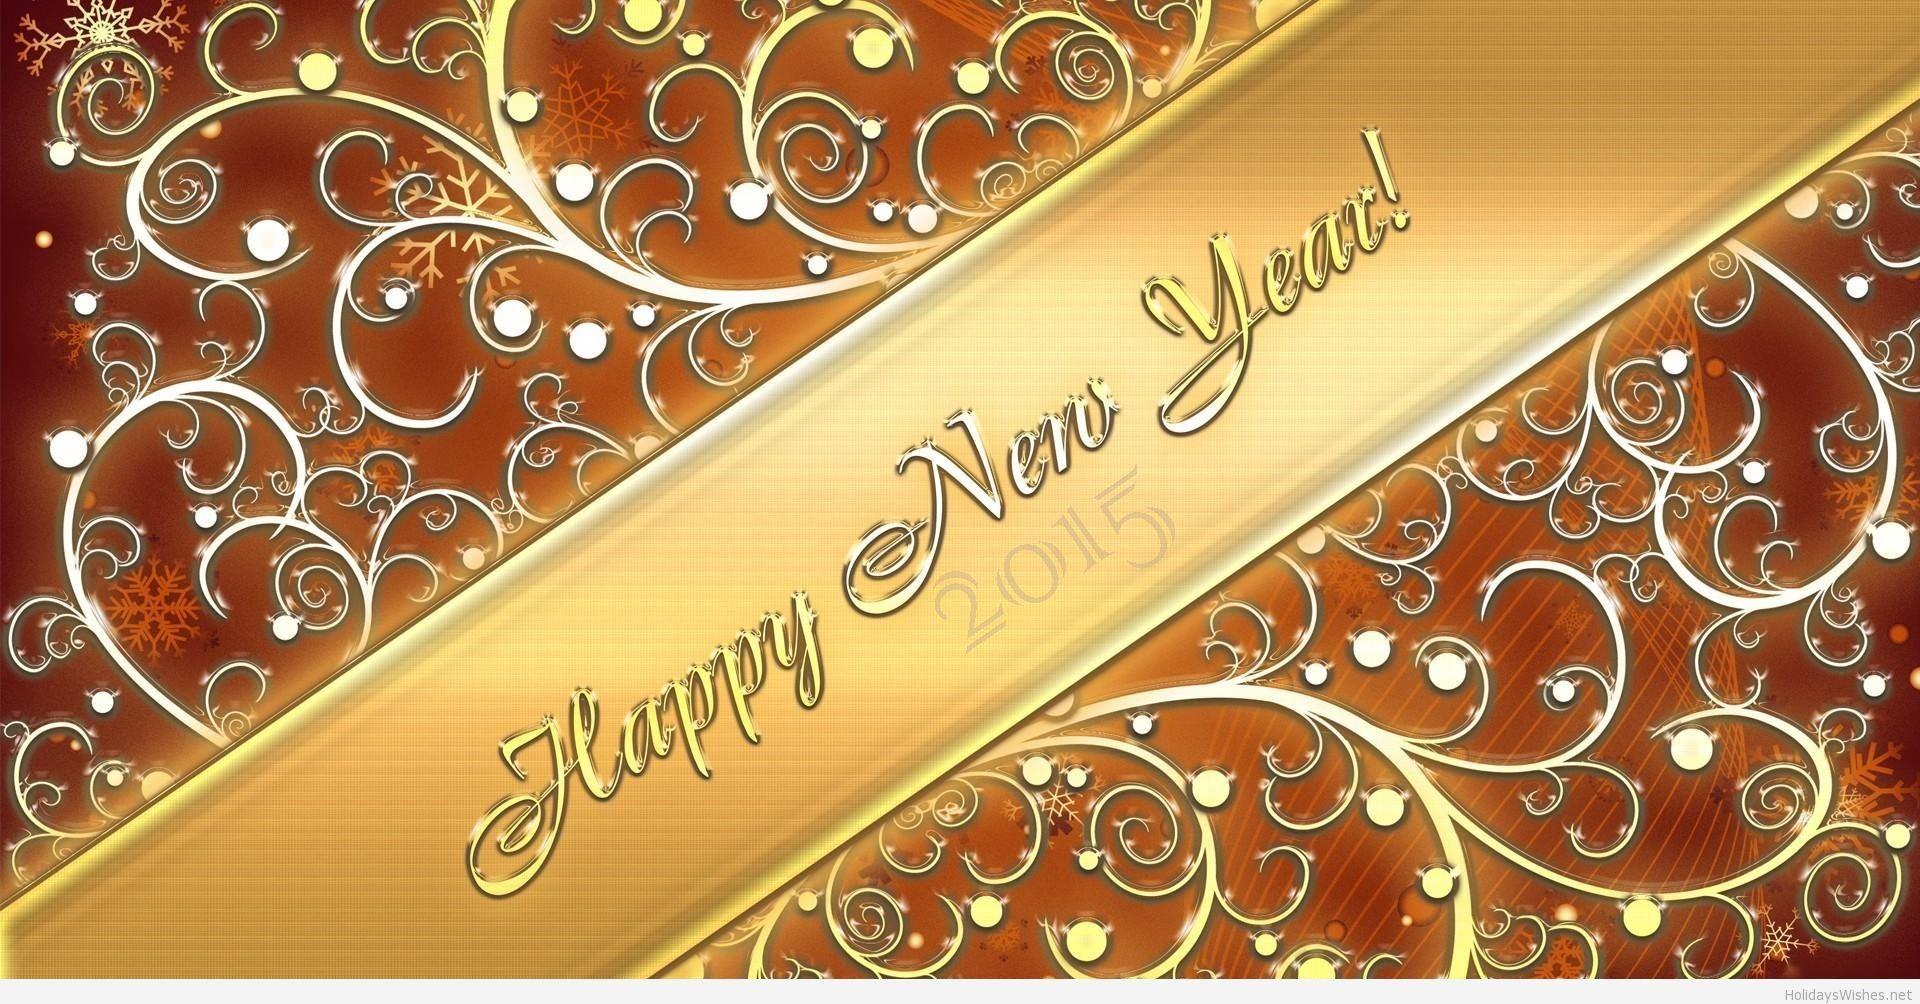 Happy New Year 2015 Celebration Card Wallpaper Wallpaper